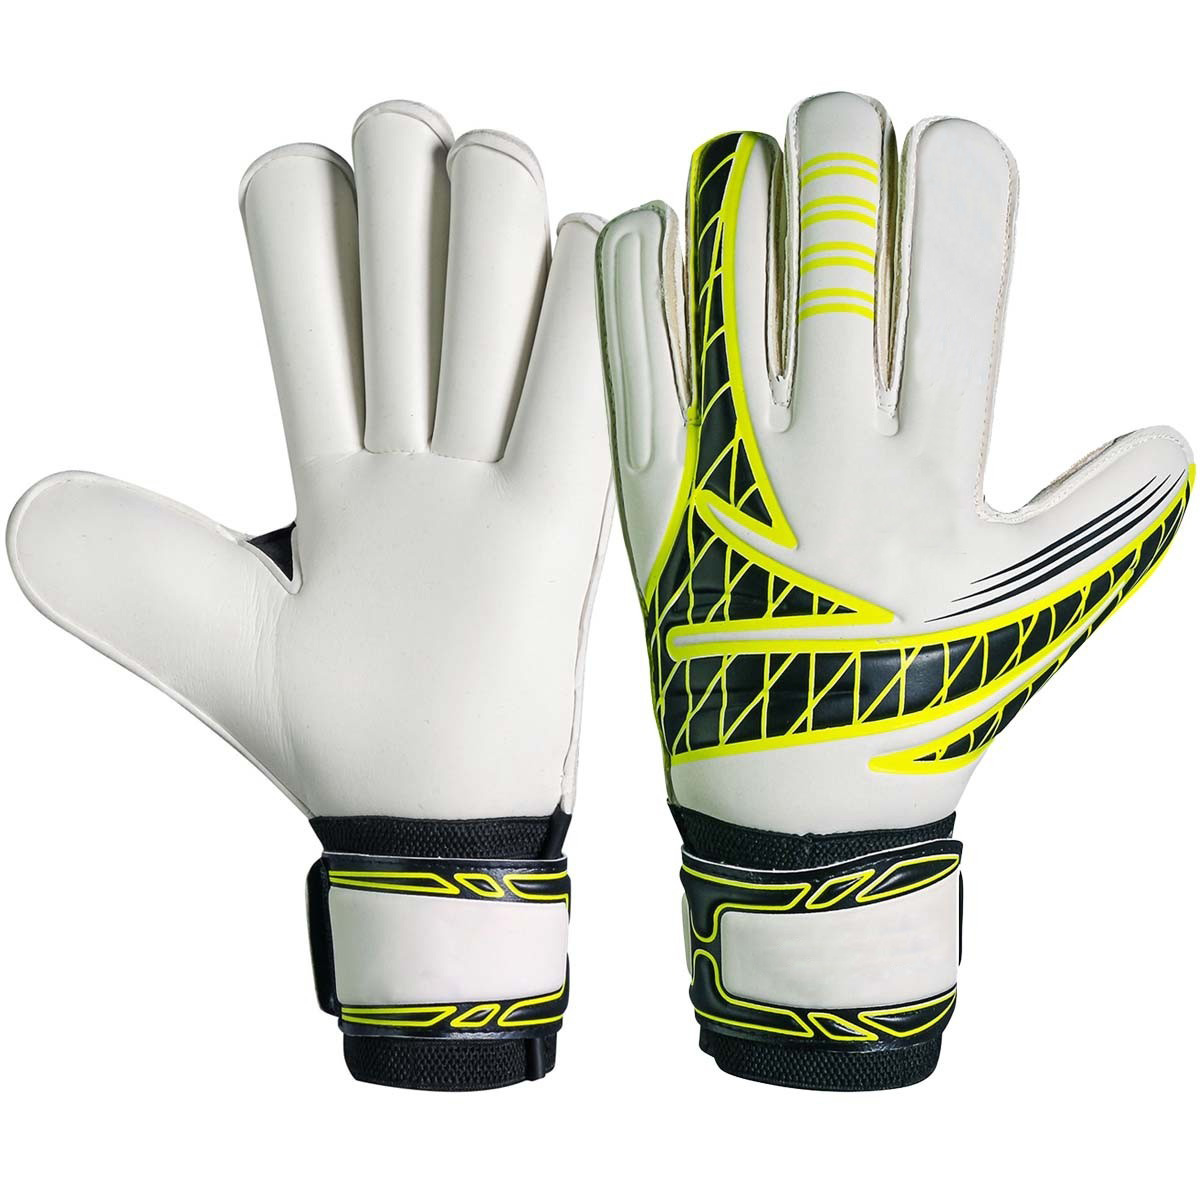 natural latex goalkeeper gloves fingers protection goalkeeper gloves youth goalkeeper gloves